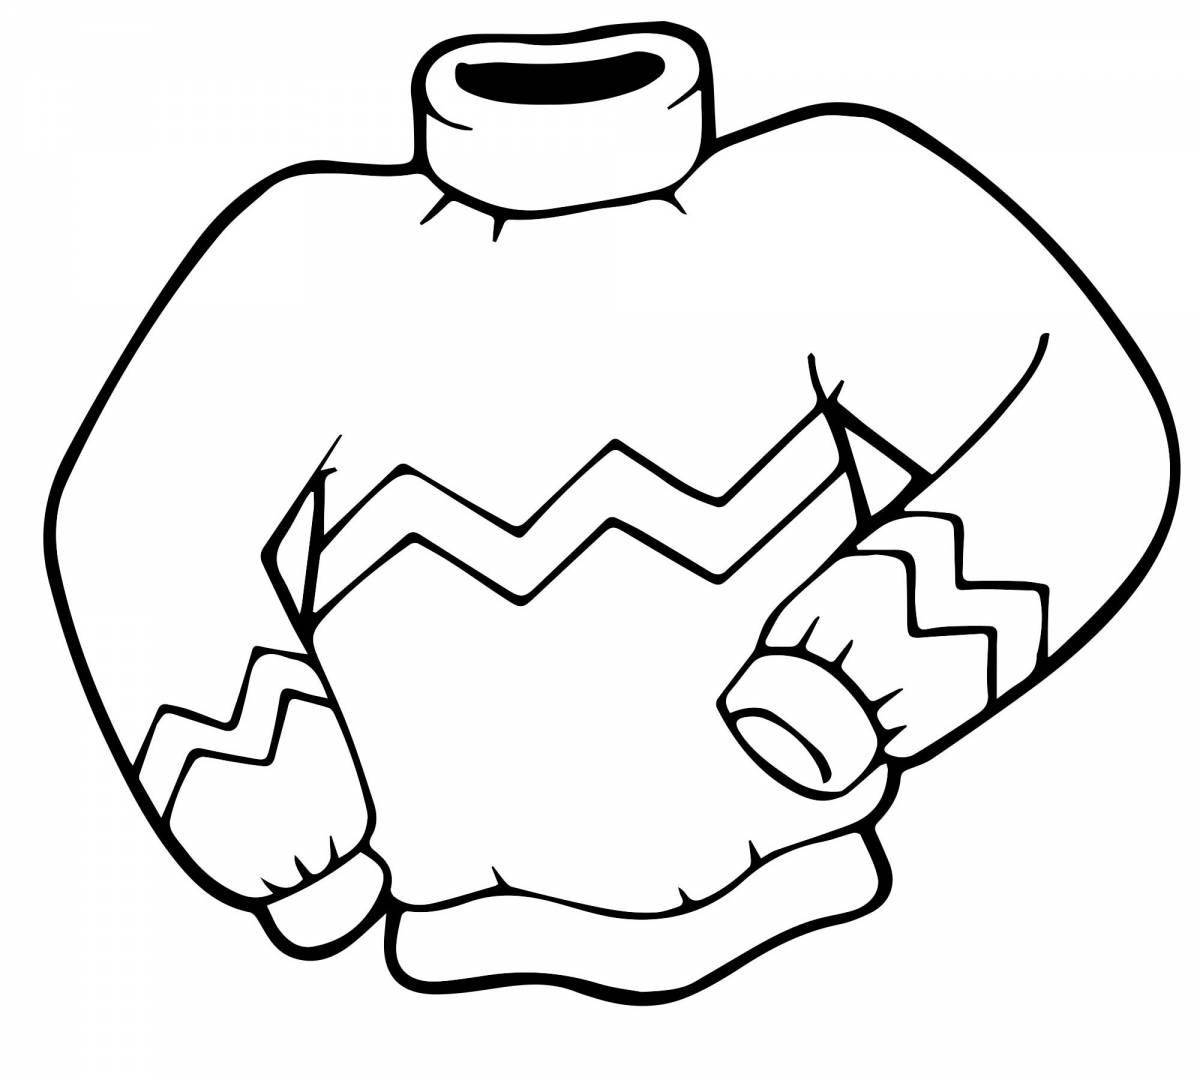 Fun sweater coloring for preschoolers